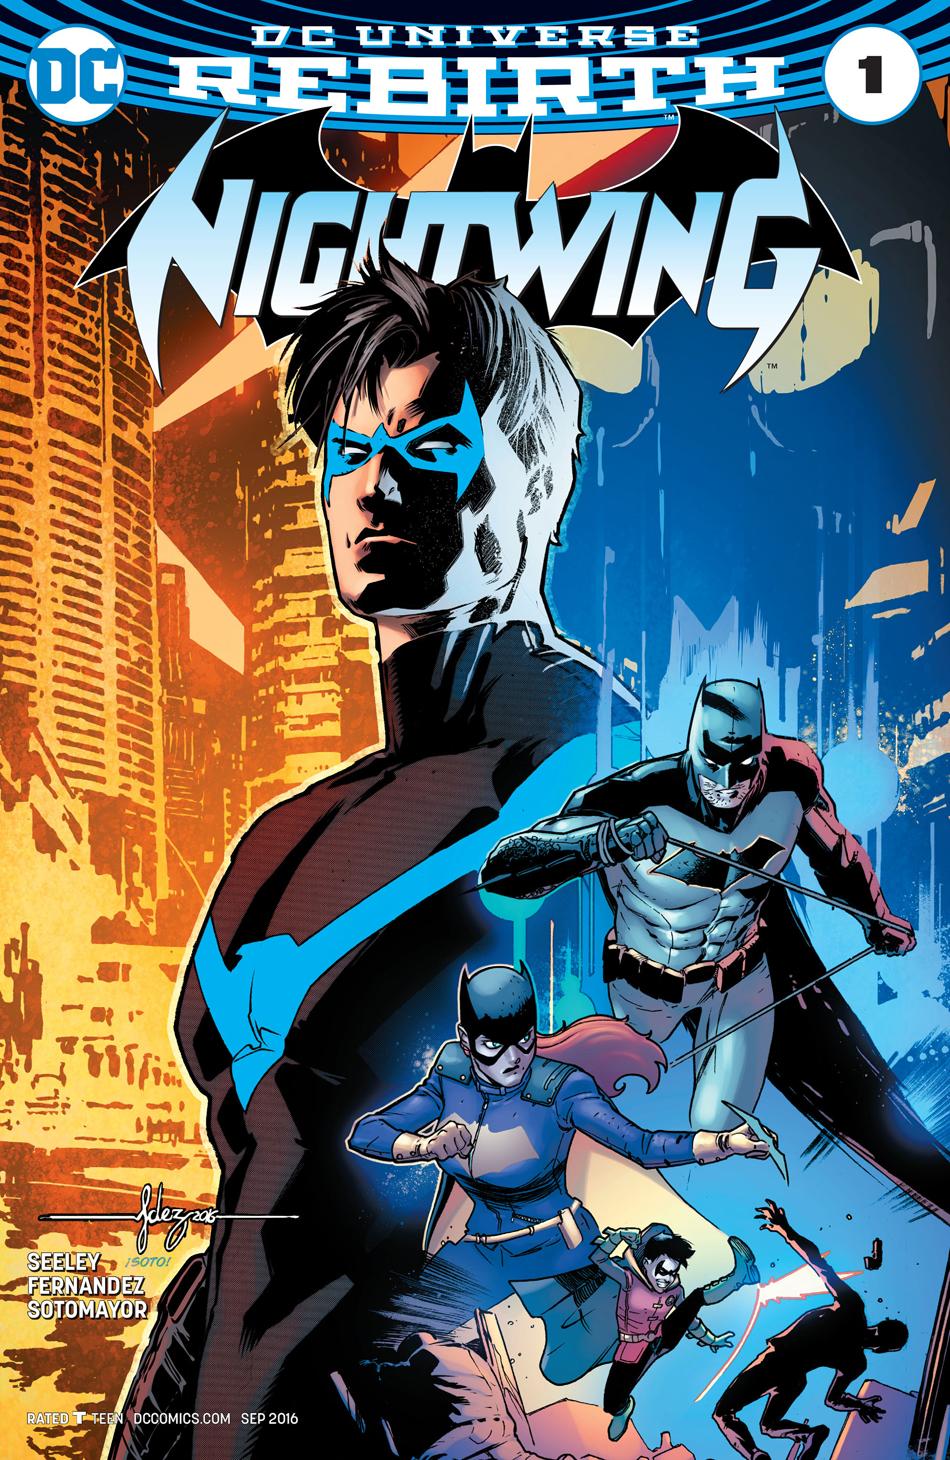 Nightwing Vol. 4 #1